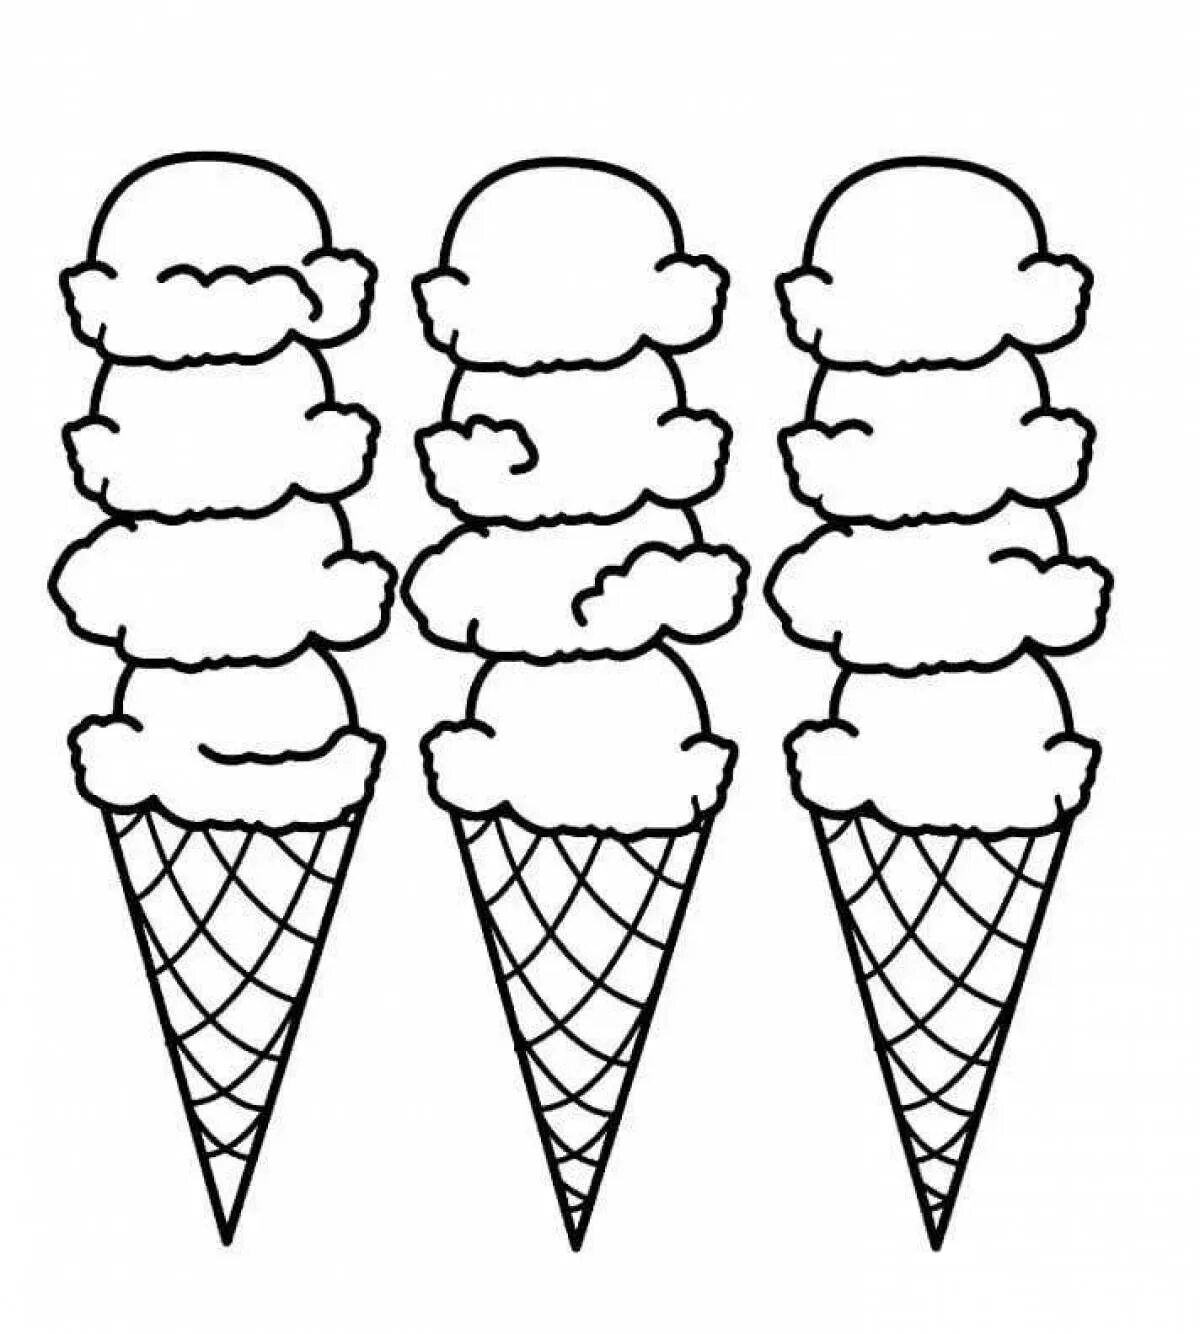 Раскраска мороженки. Раскраска мороженое. Раскраска МО РО же но е. Мороженое раскраска для детей. Мороженое распечатать.